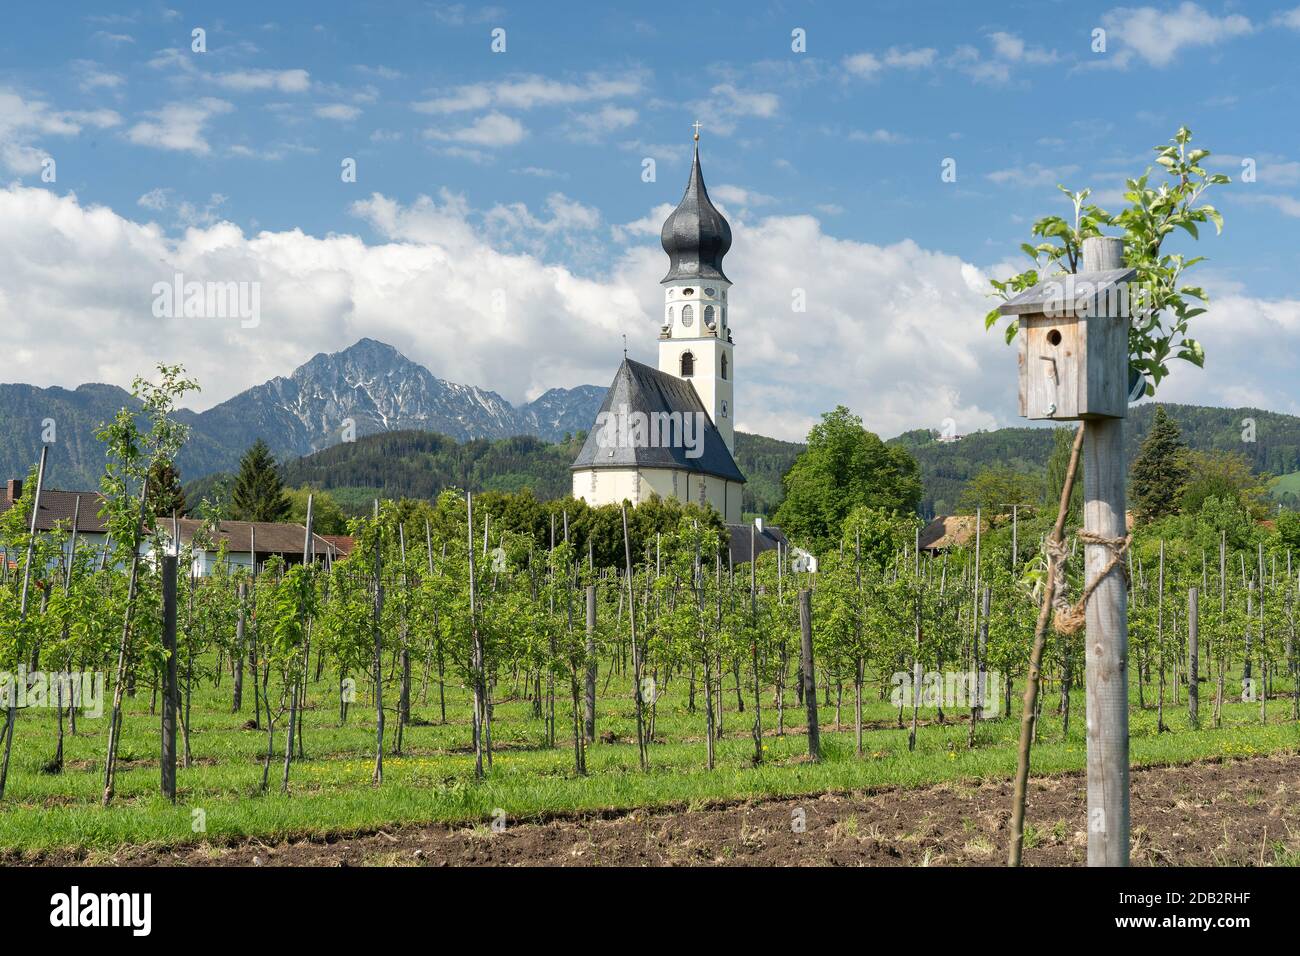 The church of Feldkirchen in the village of Ainring in summer, Upper Bavaria, Germany. In the far background the mountains Lattengebirge und Hochstaufen Stock Photo